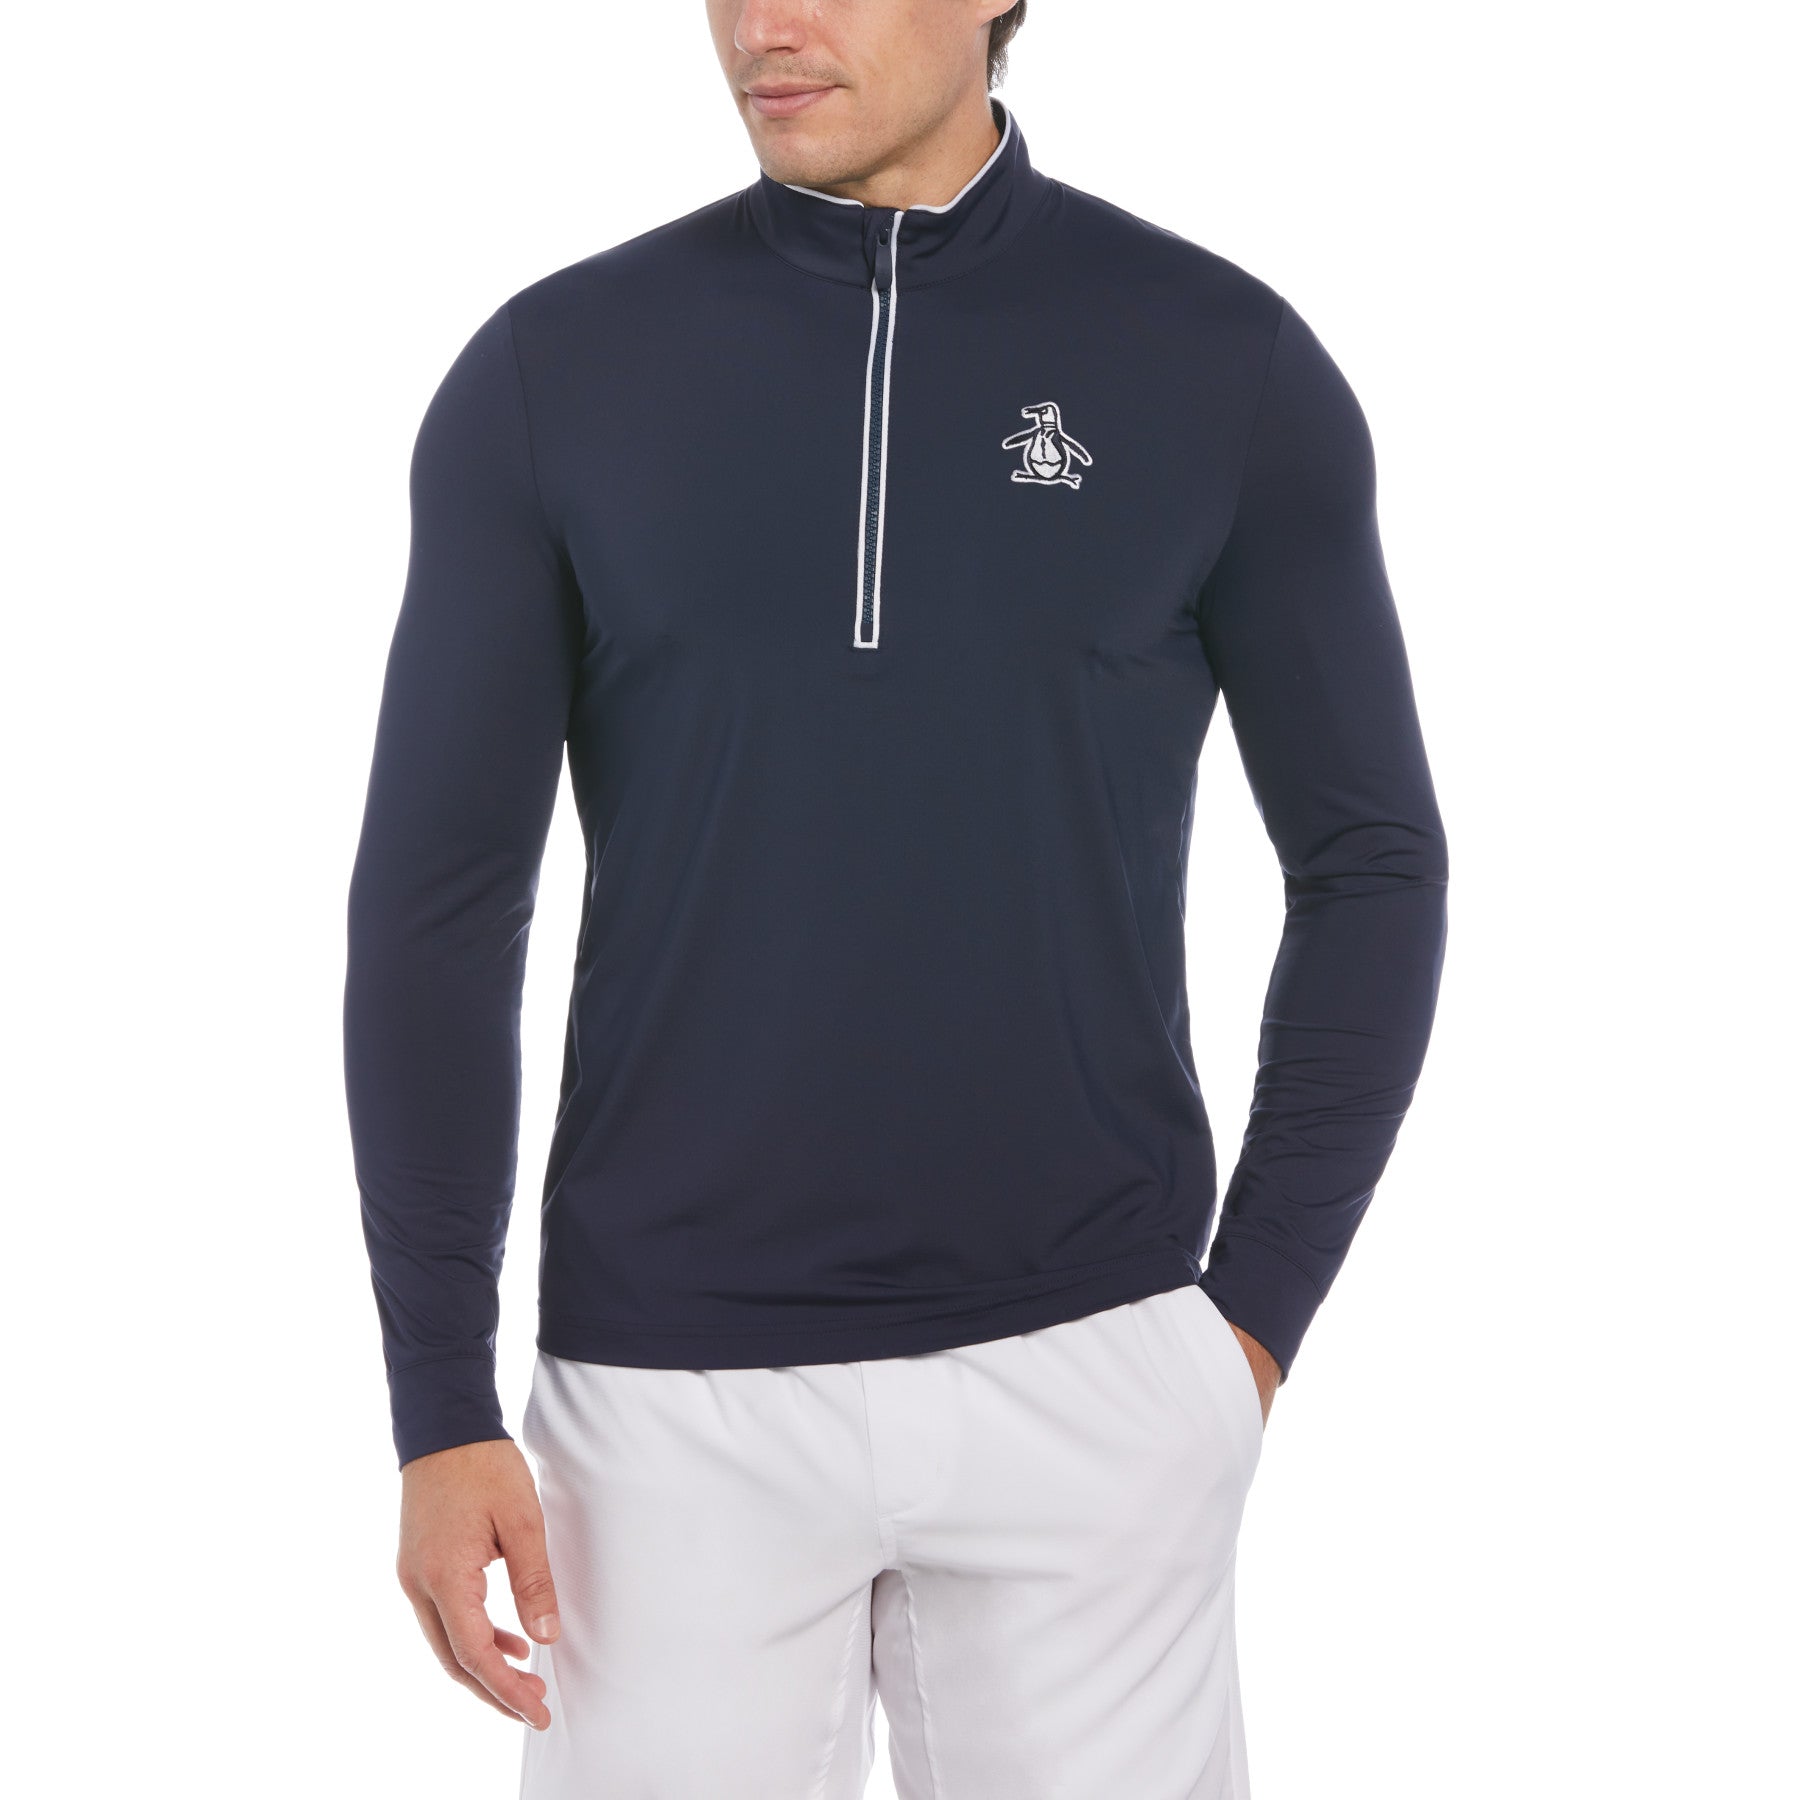 View Technical Earl 14 Zip Long Sleeve Golf Sweater In Black Iris information